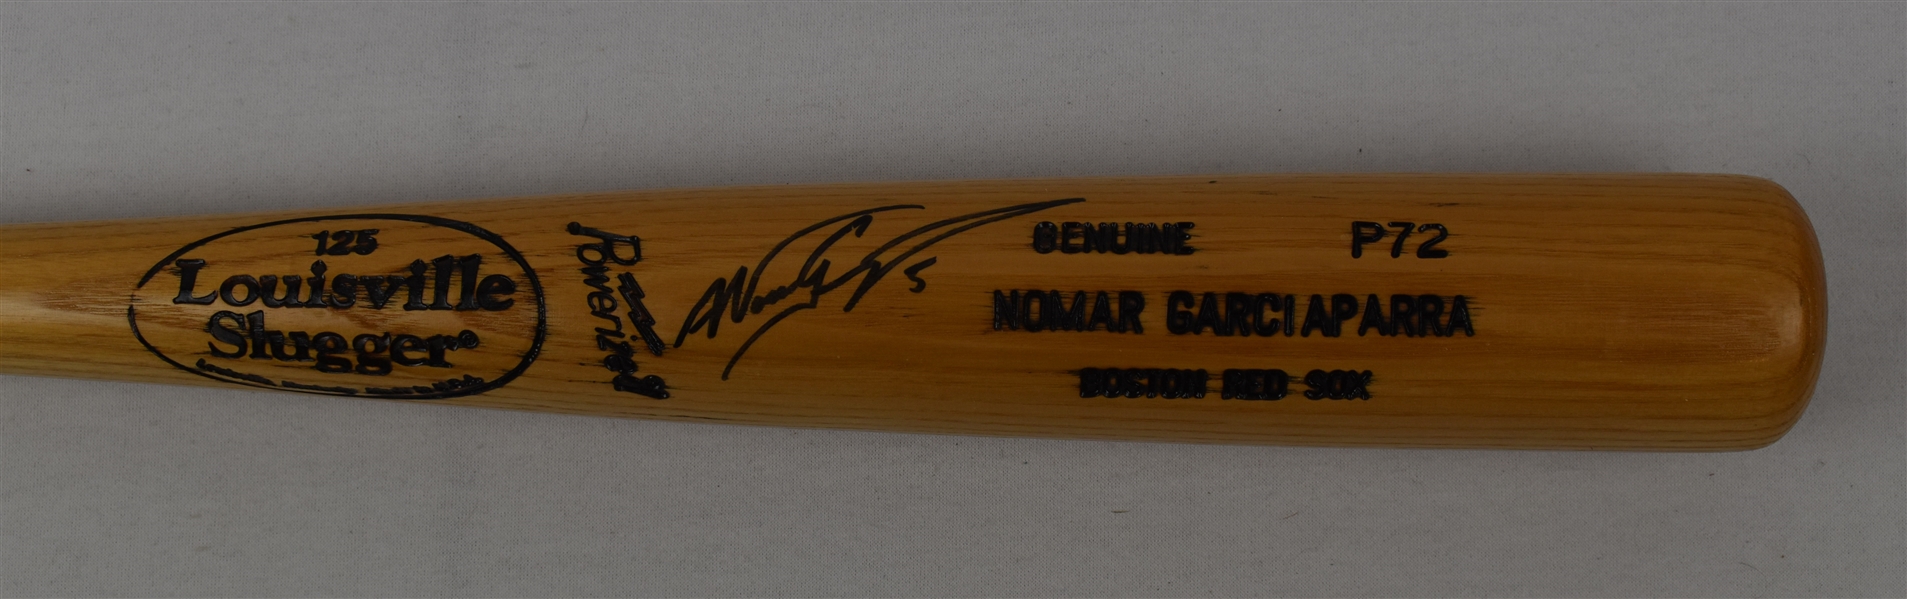 Nomar Garciaparra Autographed Bat